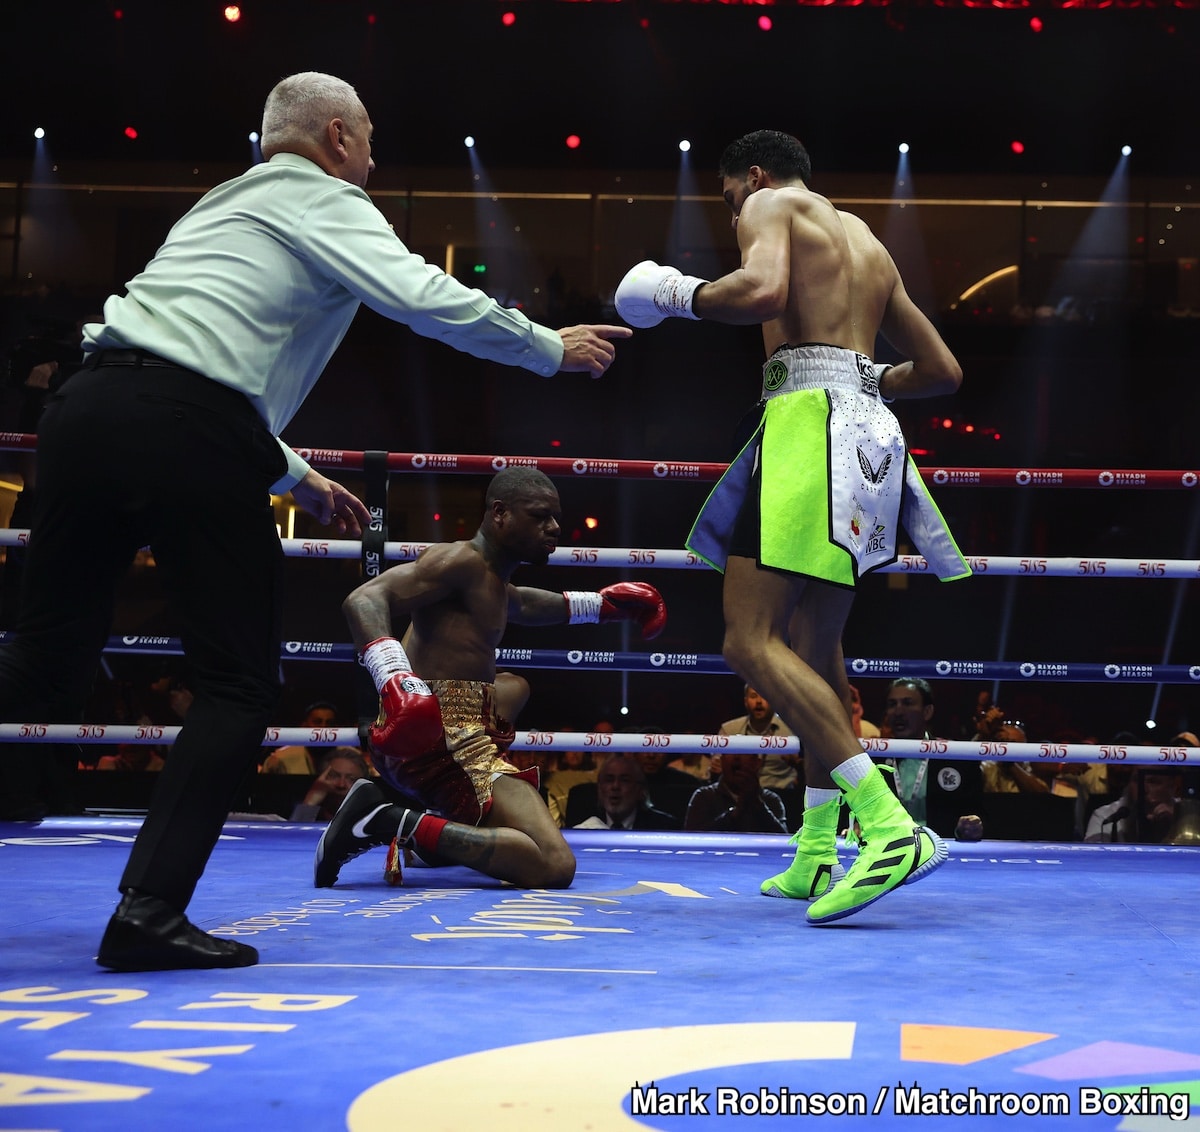 Image : Résultats de boxe : Hamzah Sheeraz démolit Ammo Williams dans WBC Middleweight Eliminator